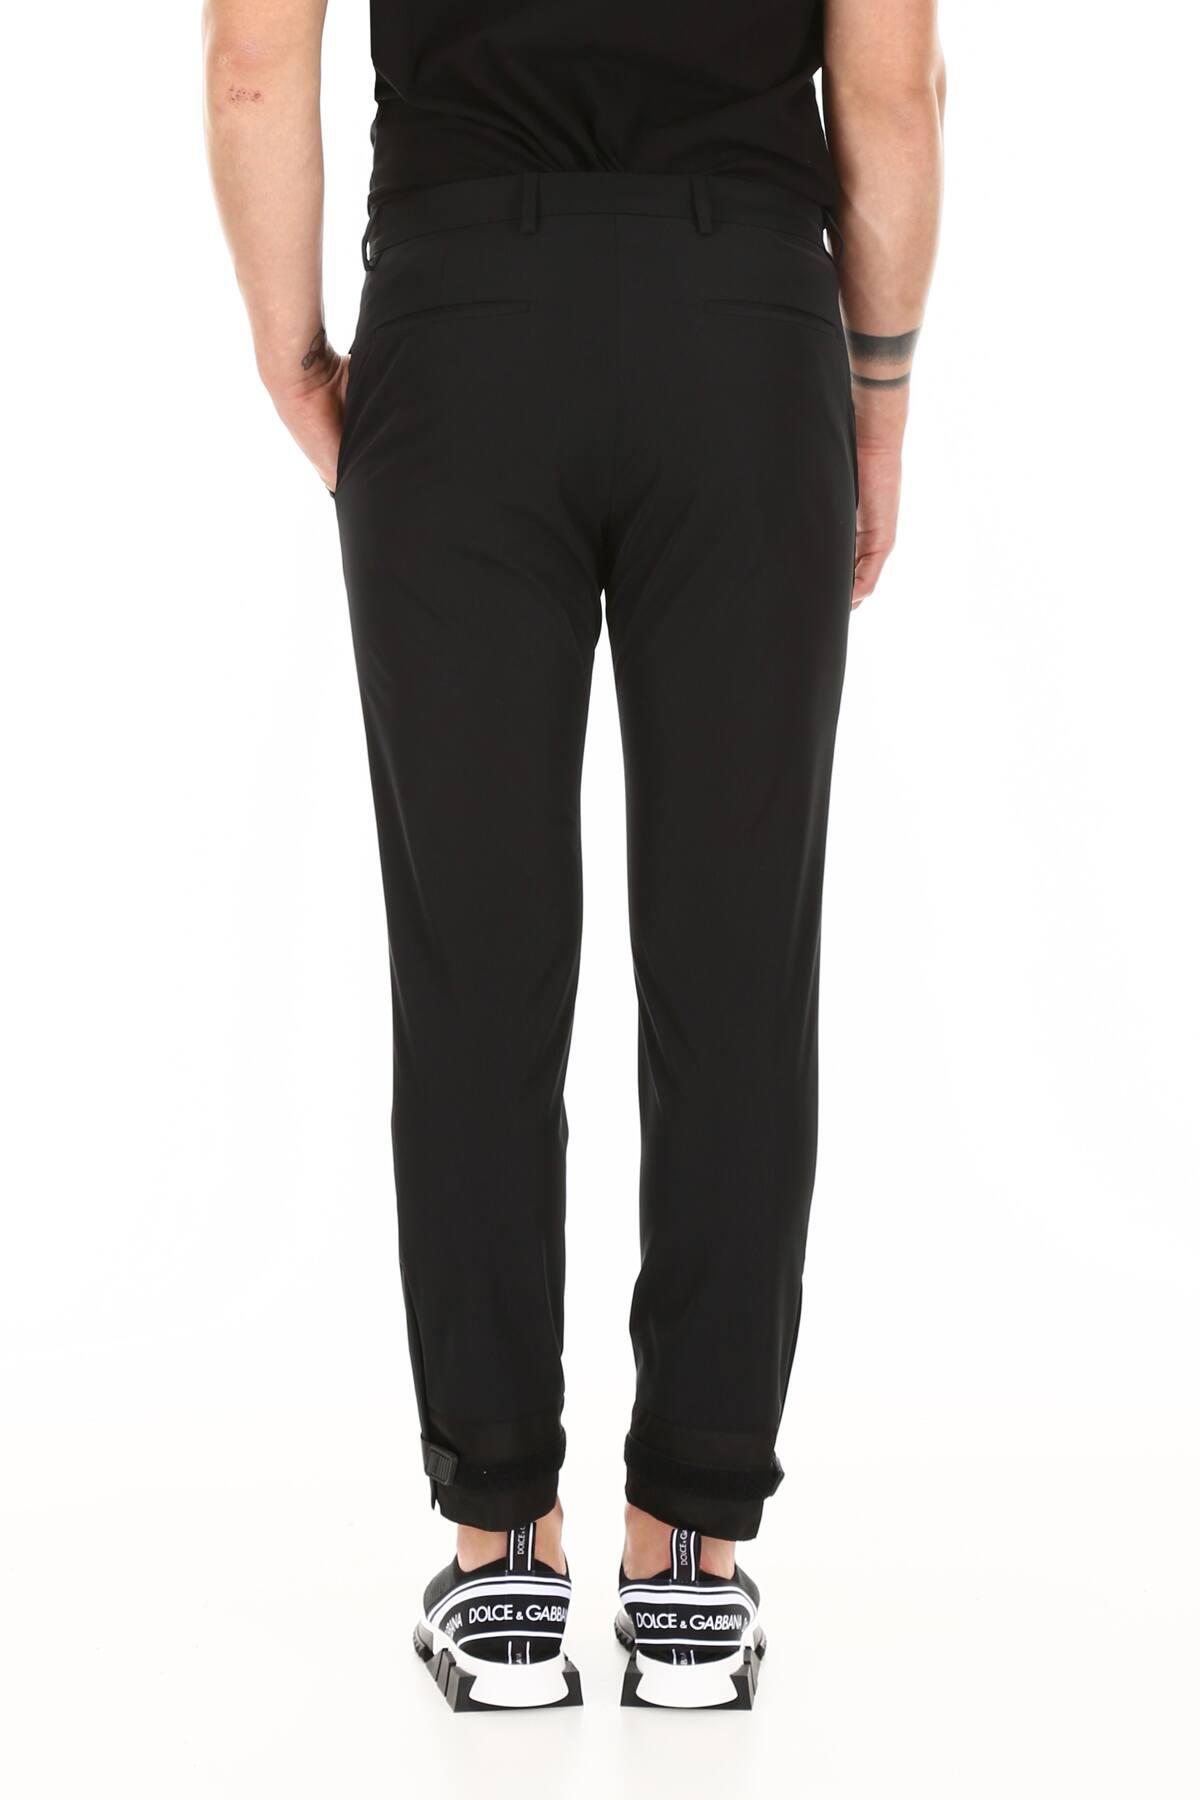 Prada Techno Fabric Trousers in Black for Men - Lyst